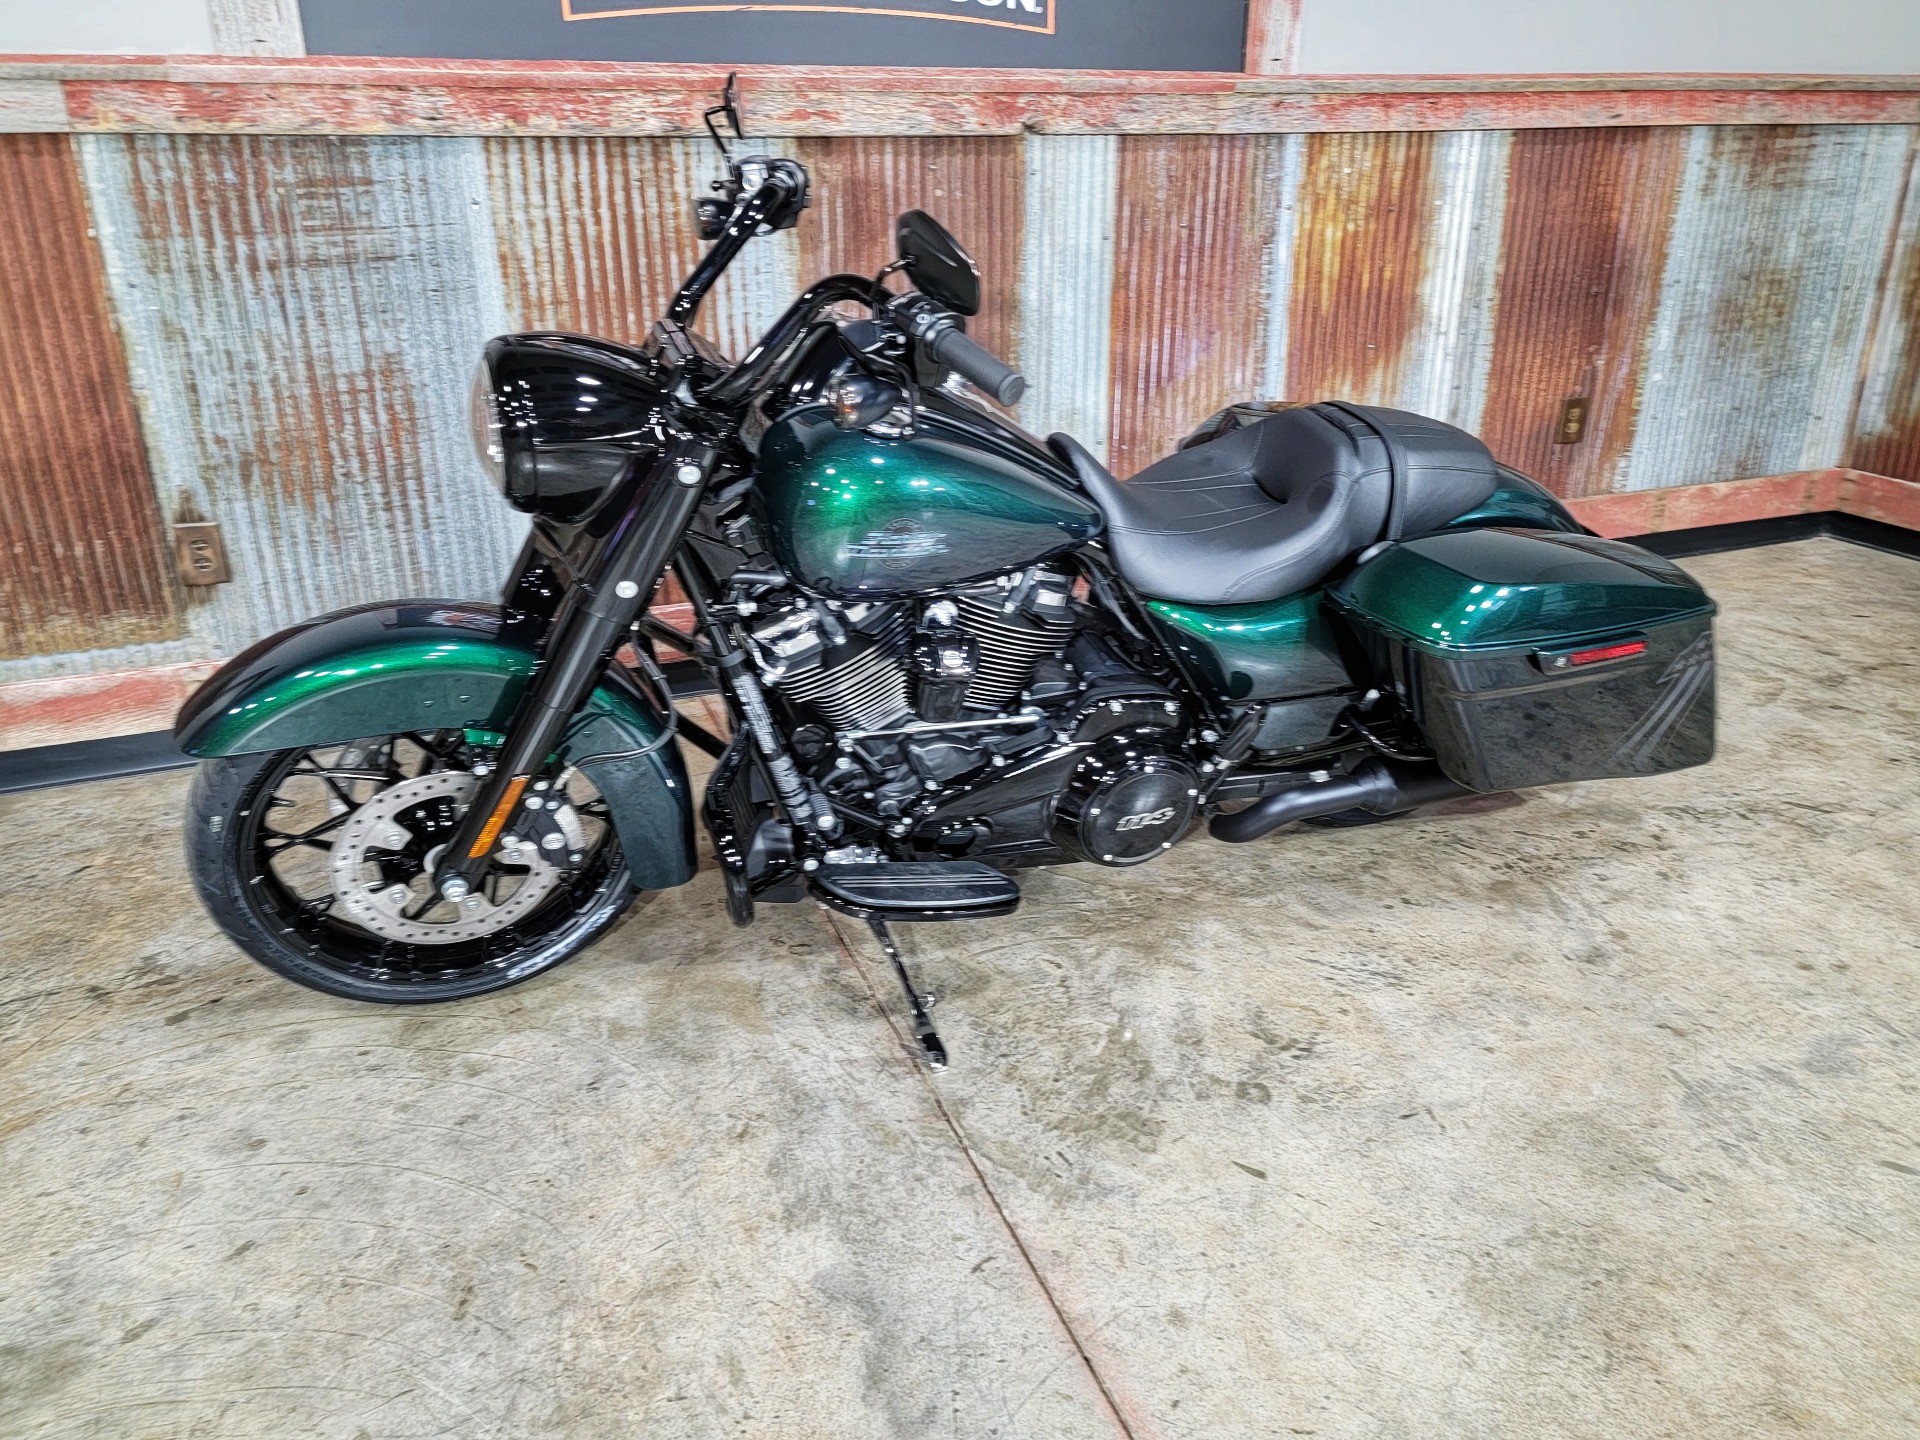 New 2021 Harley Davidson Road King Special Snake Venom Motorcycles In Chippewa Falls Wi Fl623291